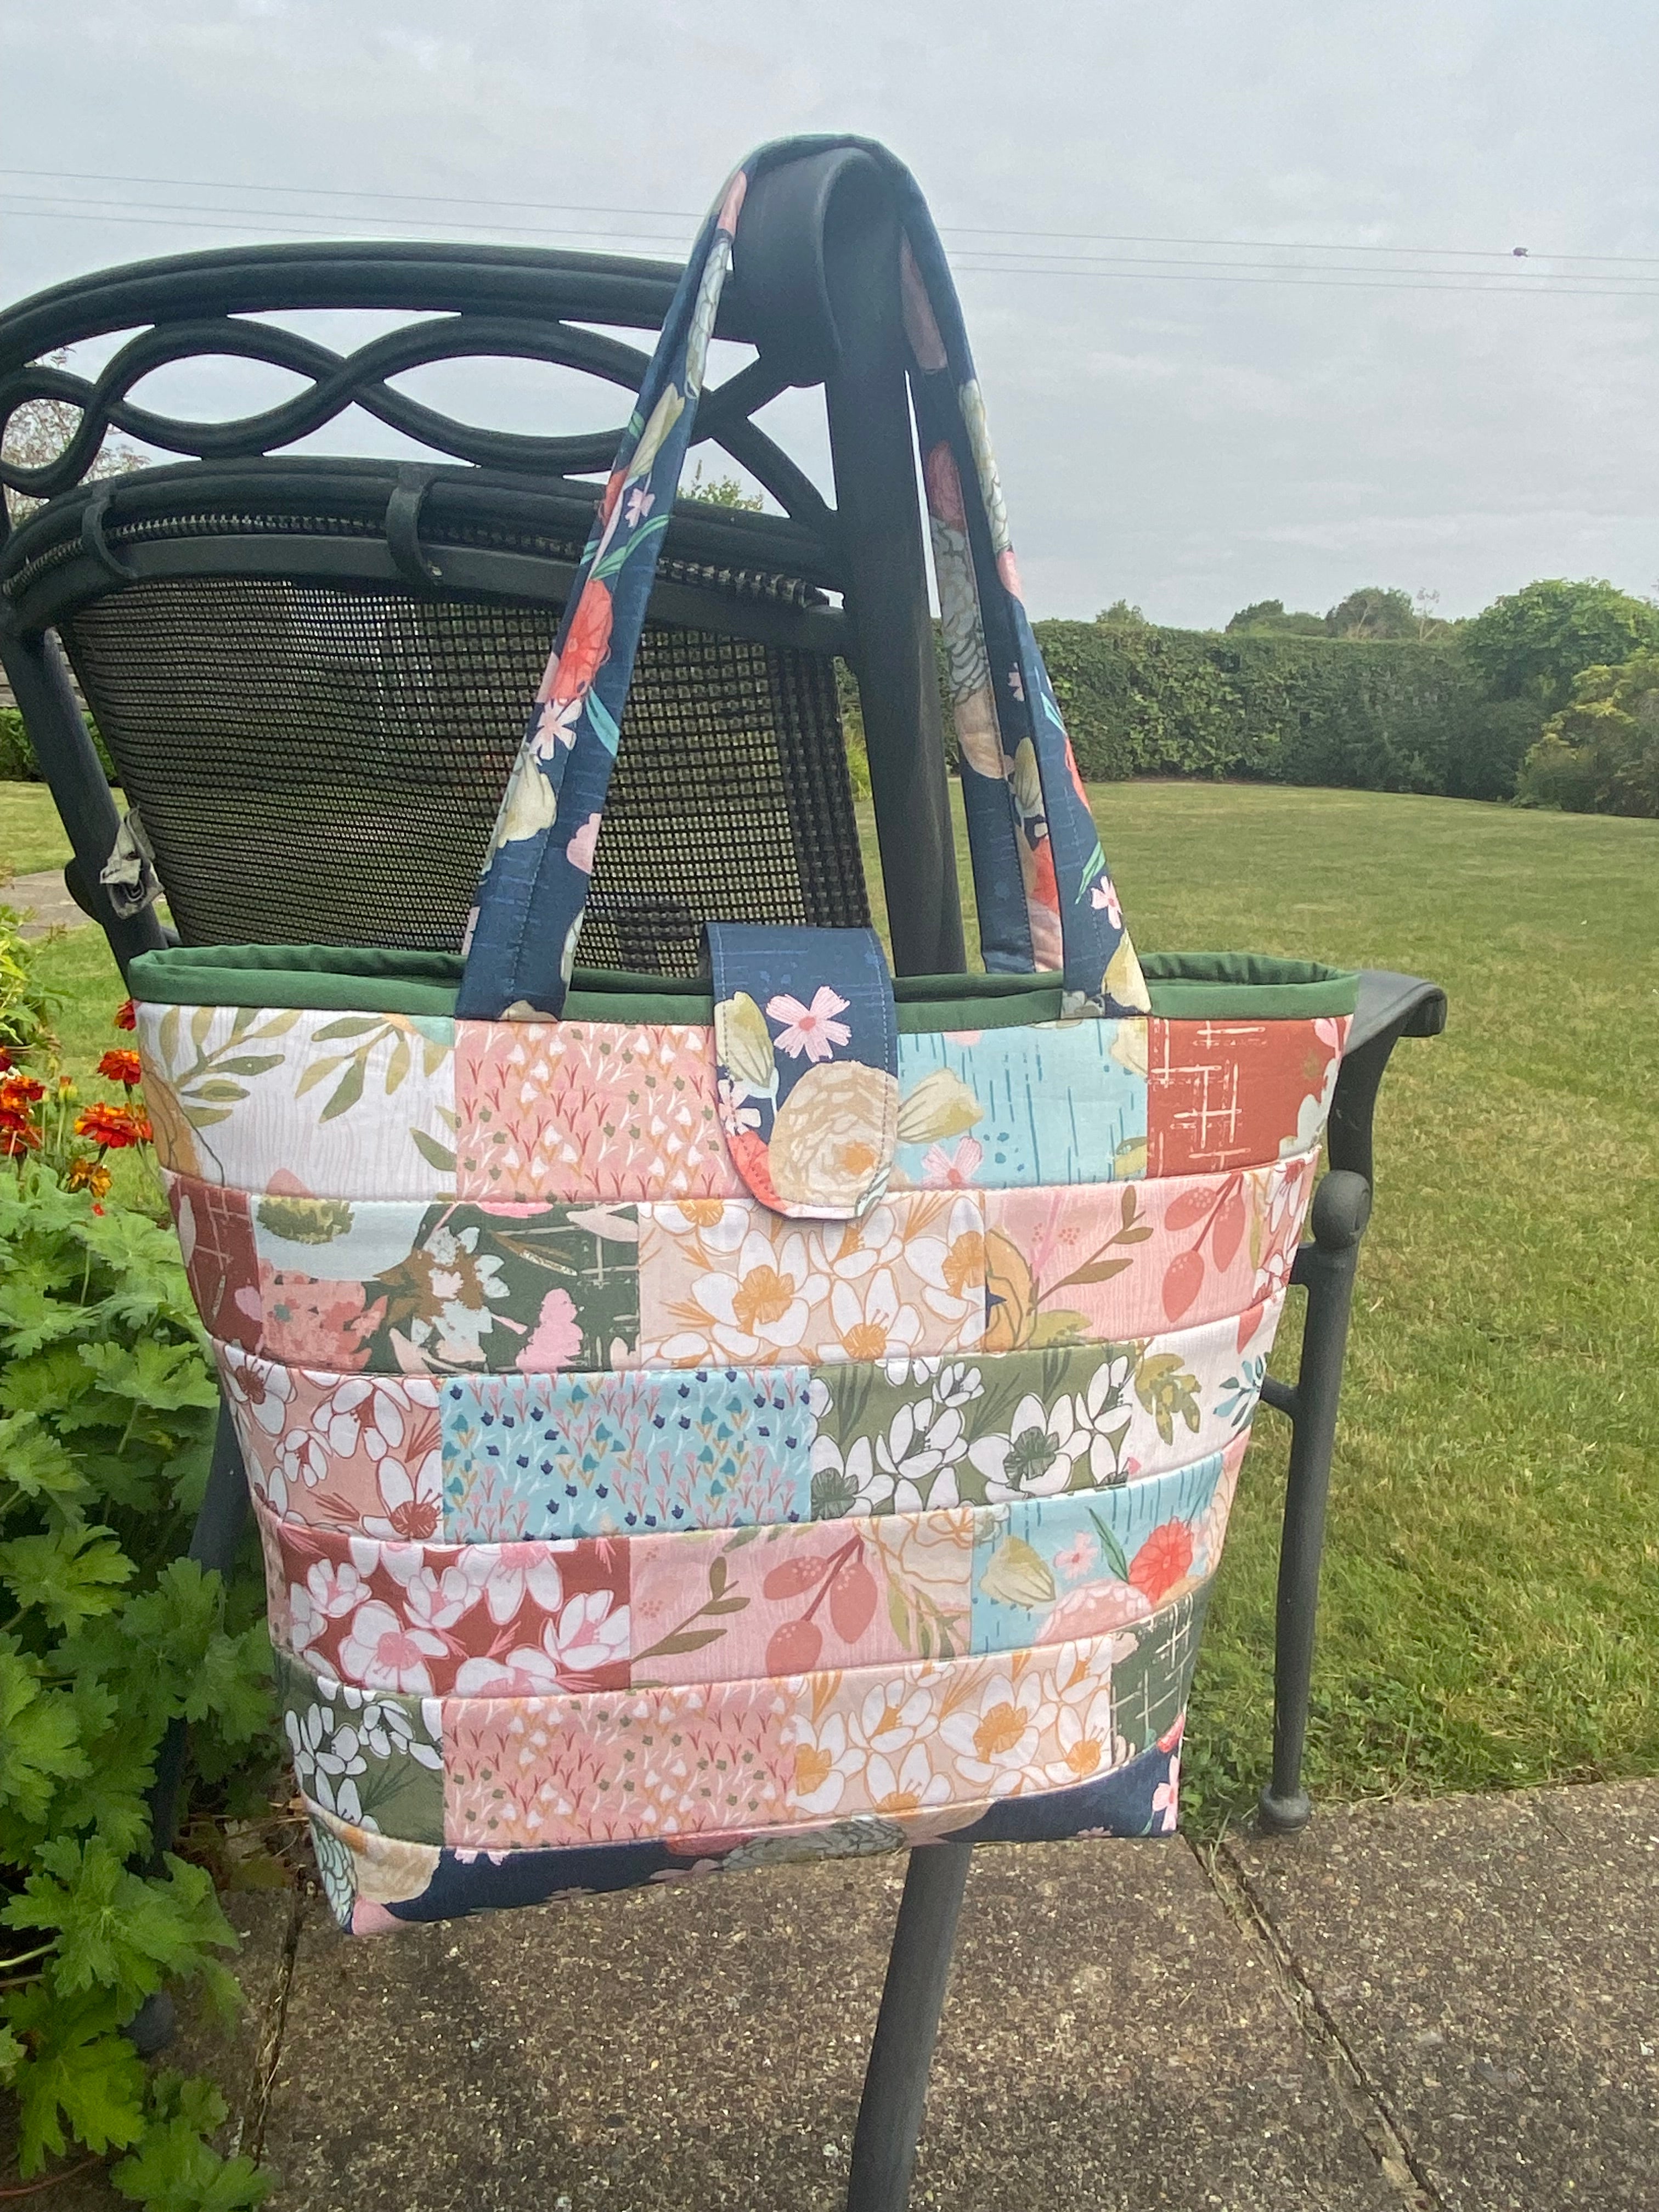 Bag Pattern - Blossom Bag by Janet Goddard